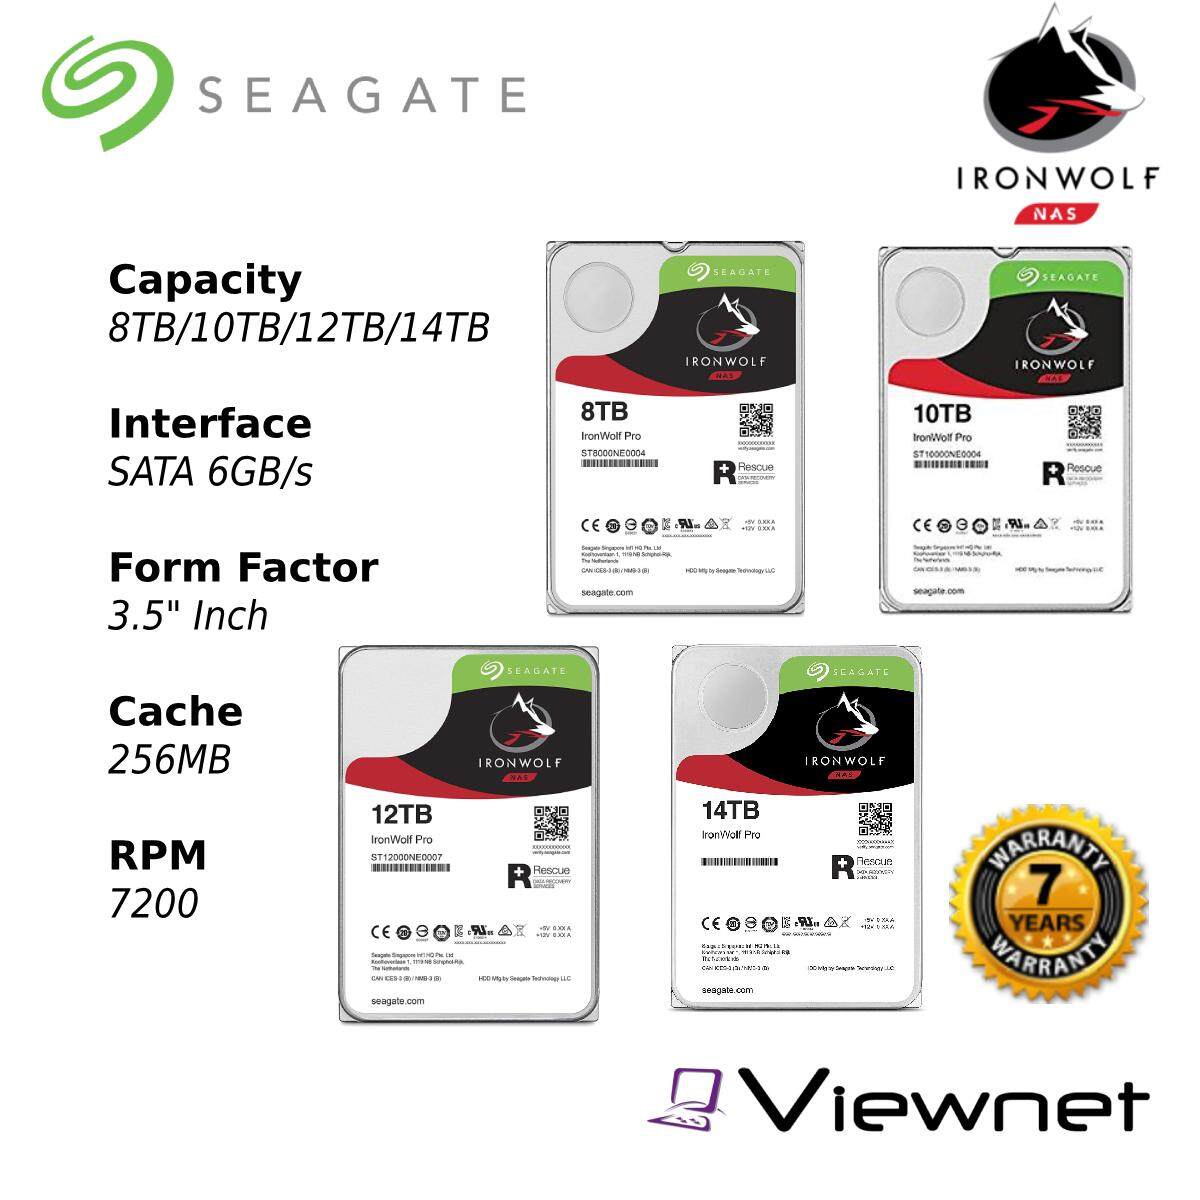 Seagate Ironwolf Pro 10TB Internal Hard Drive - 7200RPM SATA 6Gb/s 256MB 3.5